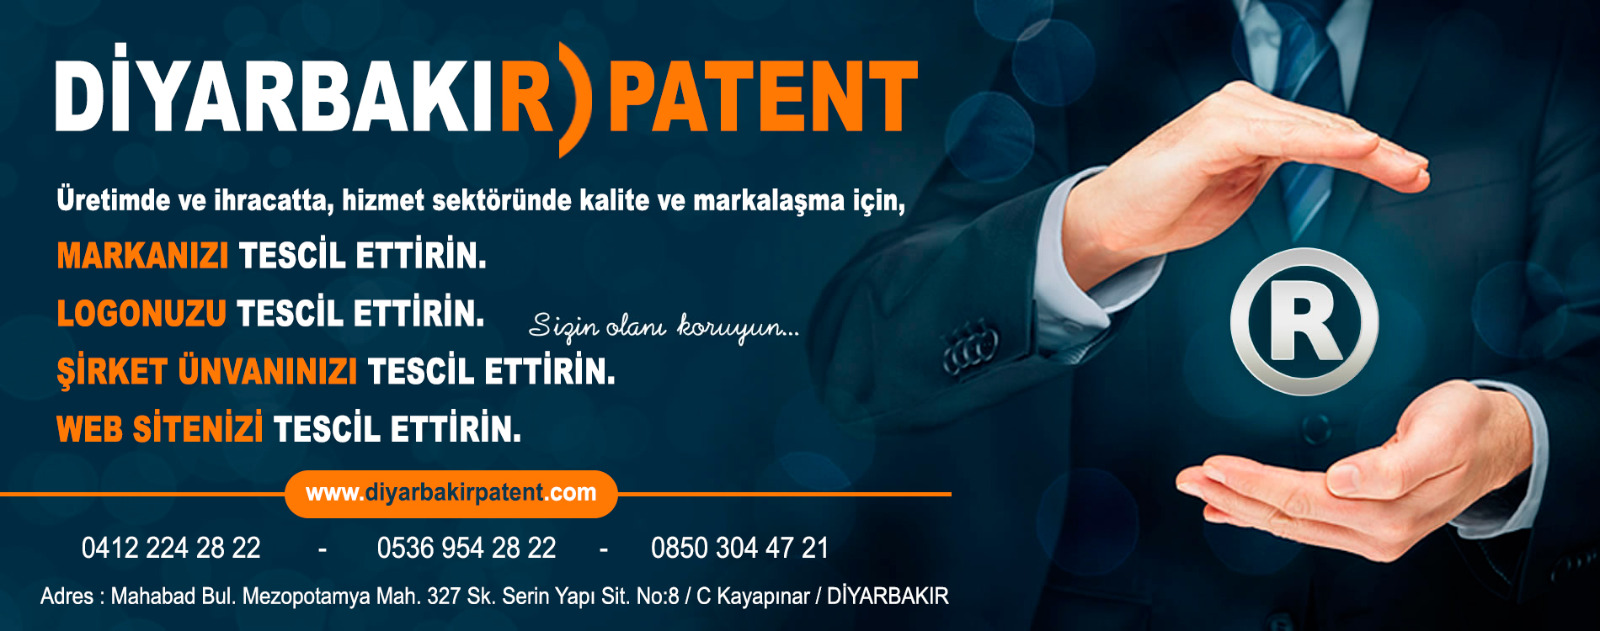 Diyarbakır Patent Tescili sorgulama 0412 224 28 22